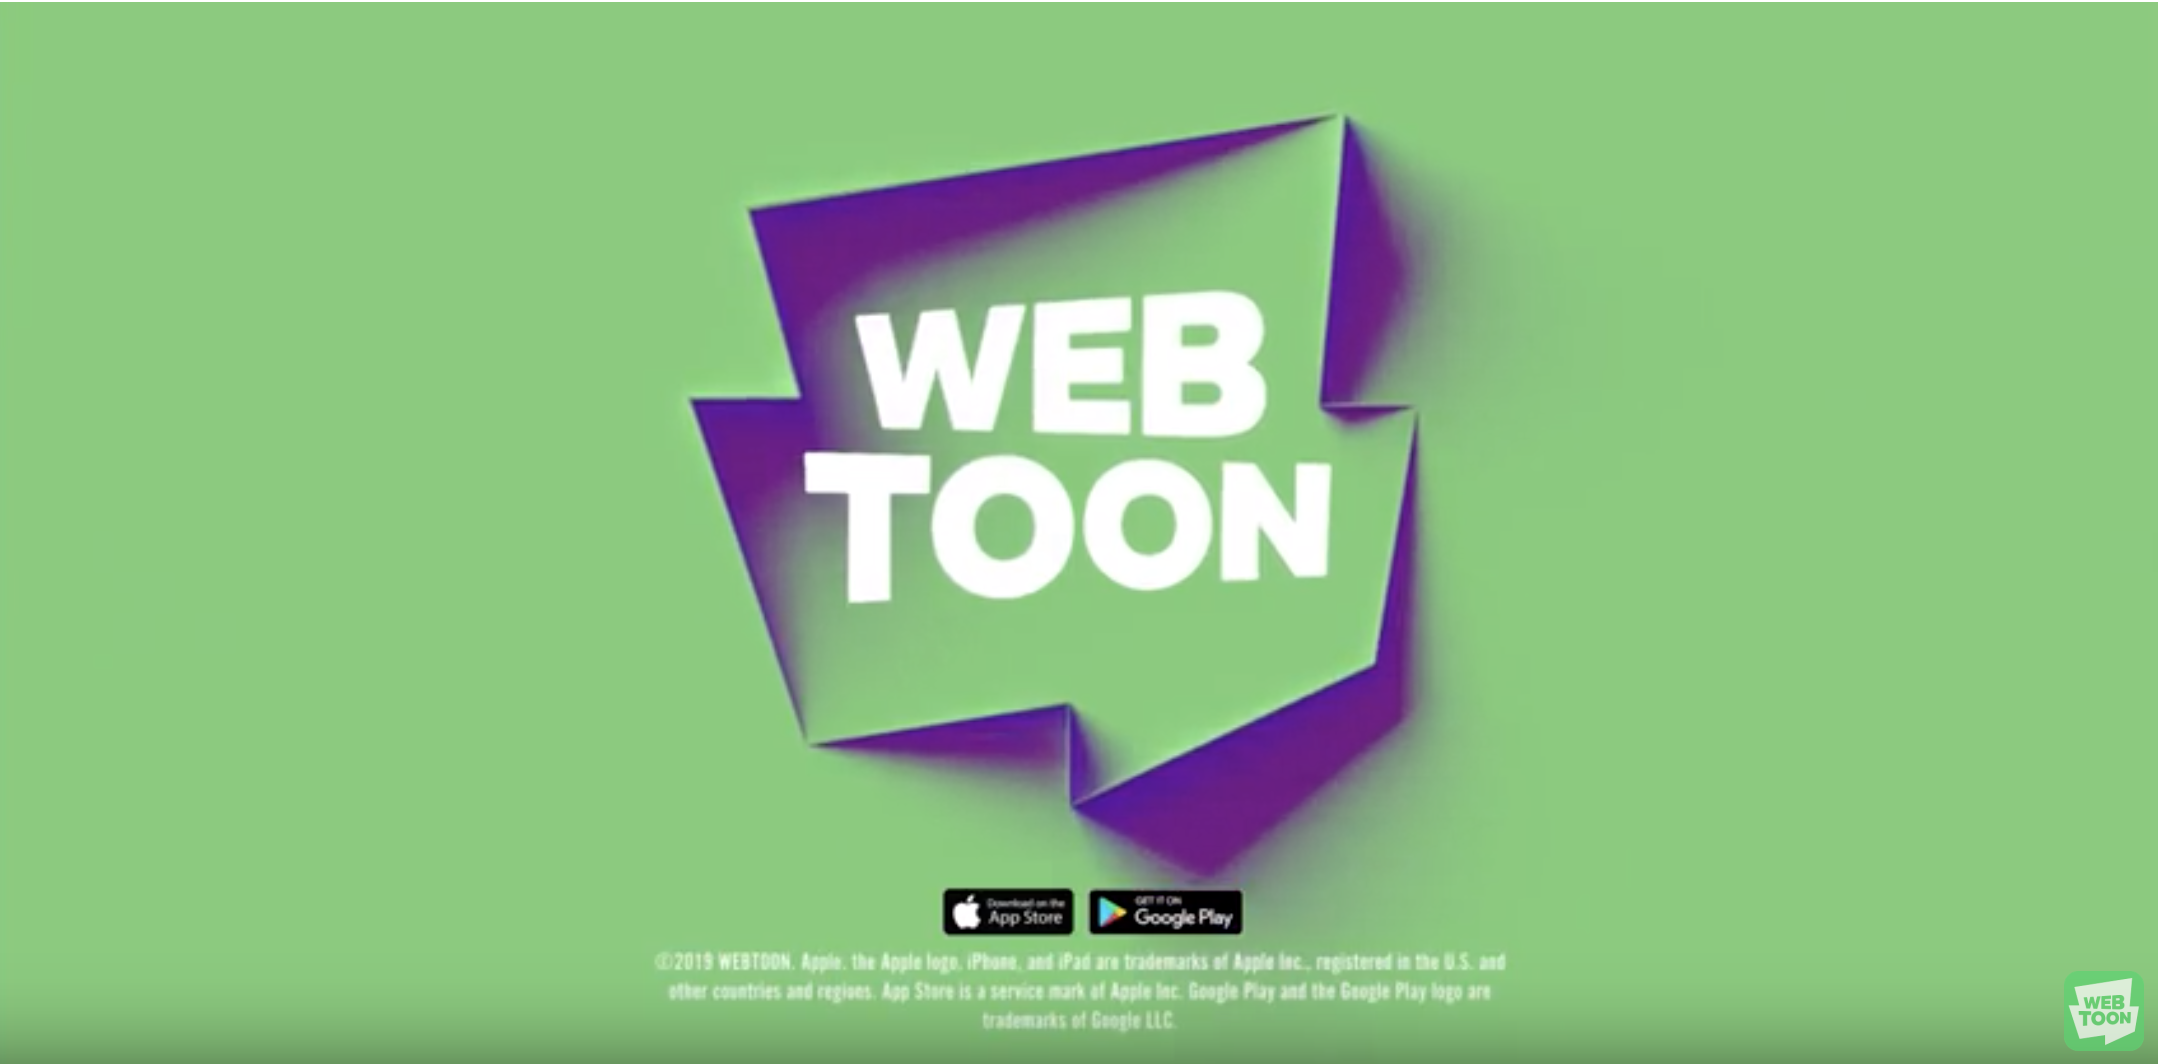 WEBTOON Celebrates Their 5th Anniversary with 100 Billion Views!